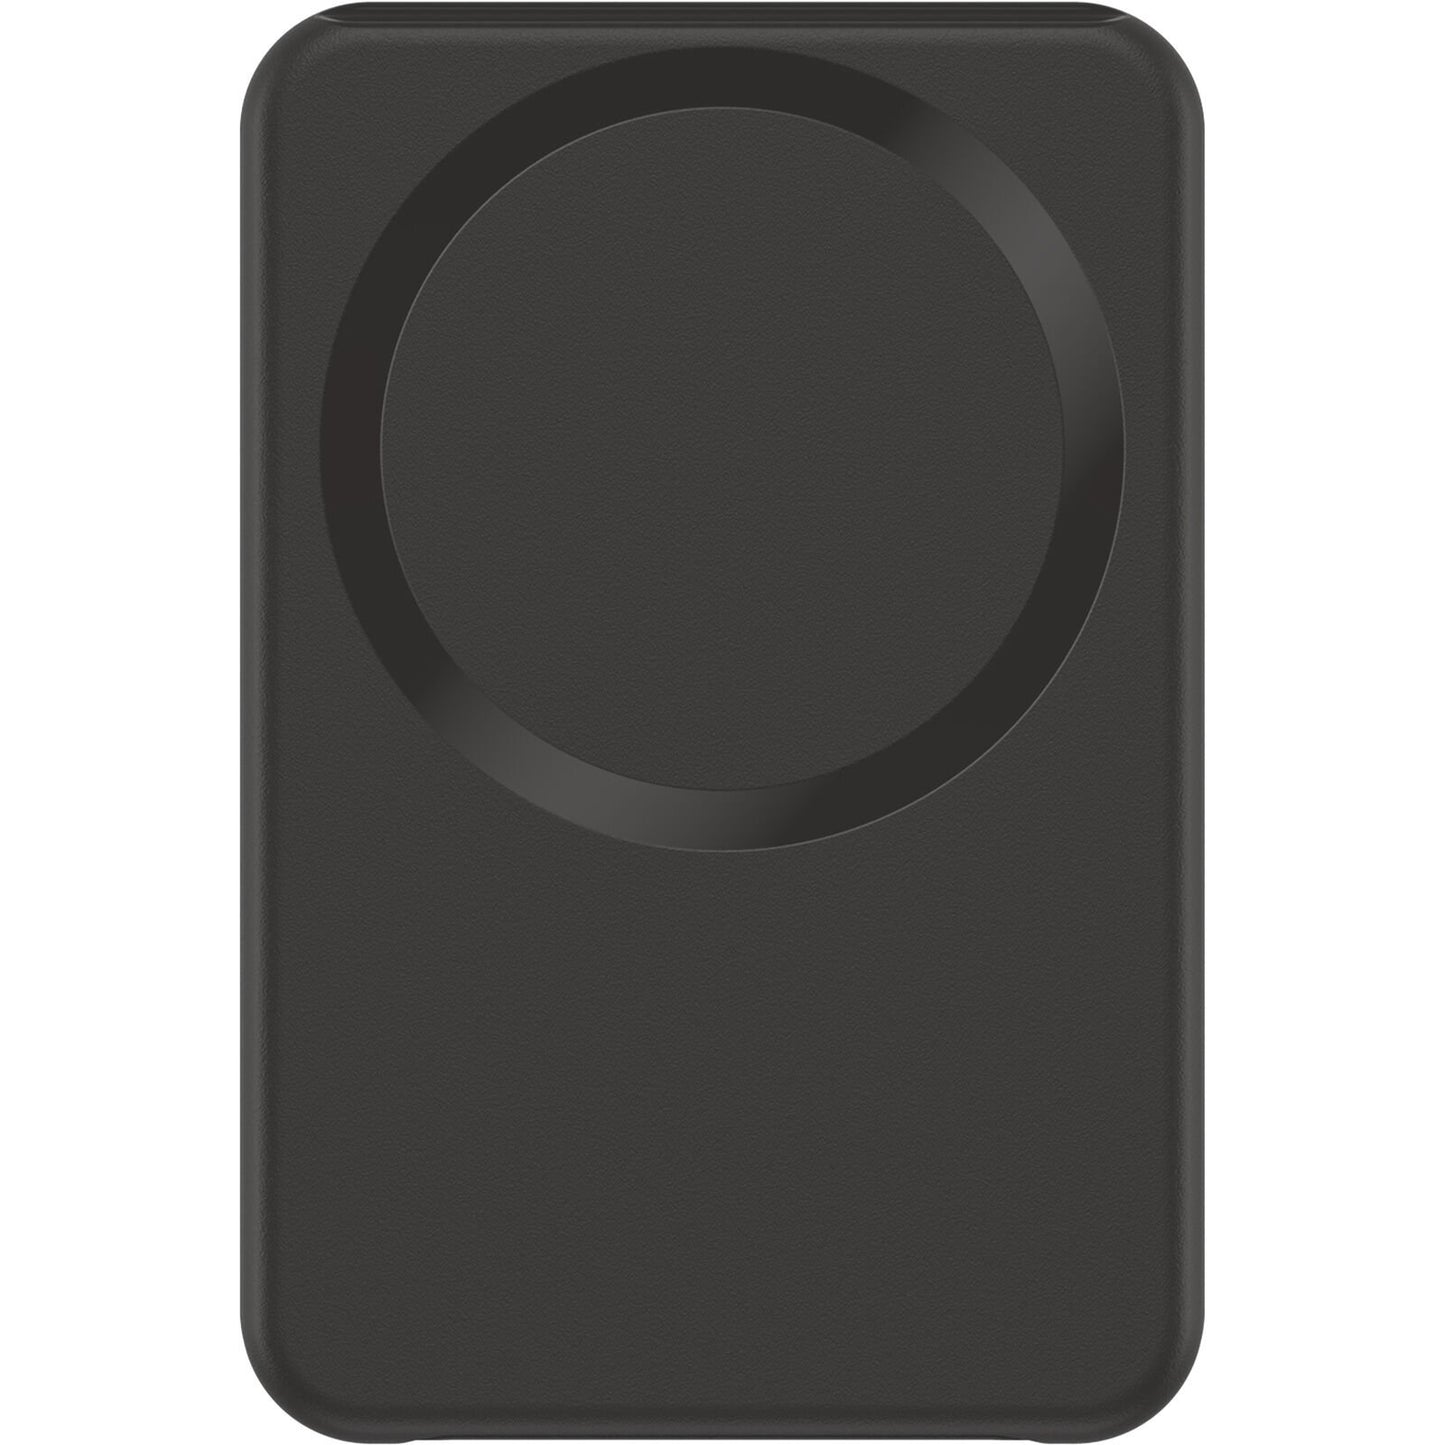 Otterbox SP6 Wireless Powerbank 3K Mah For Magsafe - Black